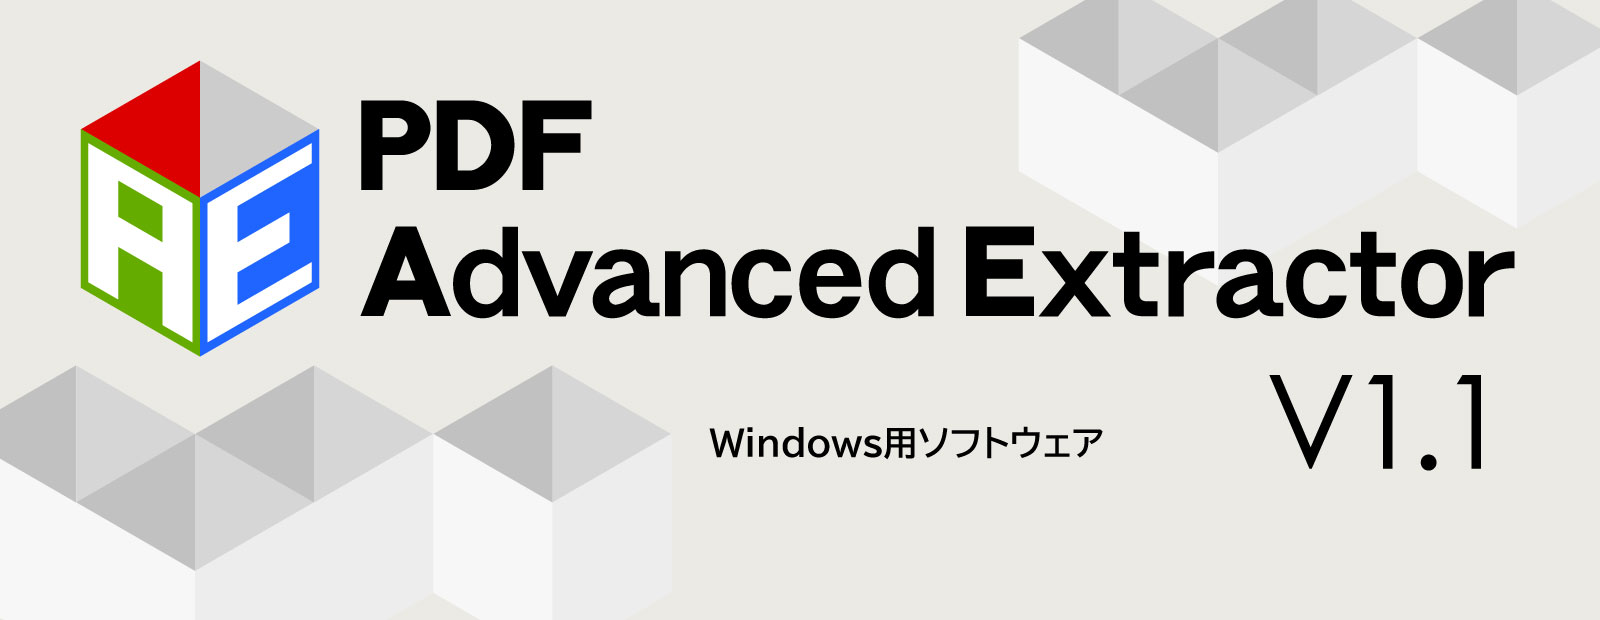 PDF Advanced Extractor V1.1